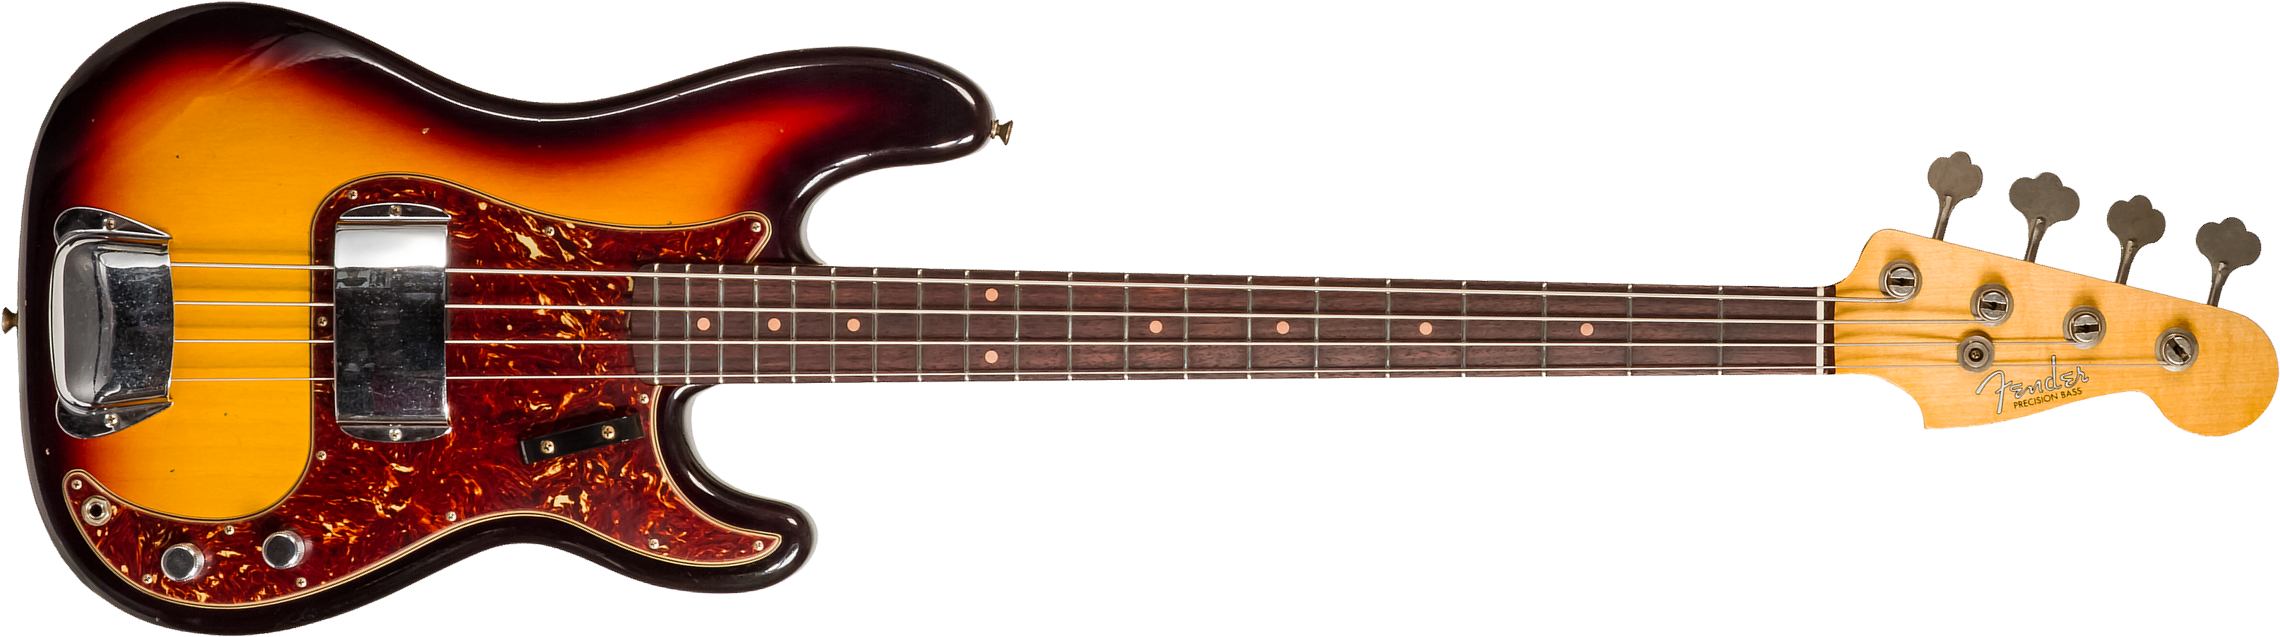 Fender Custom Shop Precision Bass 1963 Rw #cz56919 - Journeyman Relic 3-color Sunburst - Solid body electric bass - Main picture